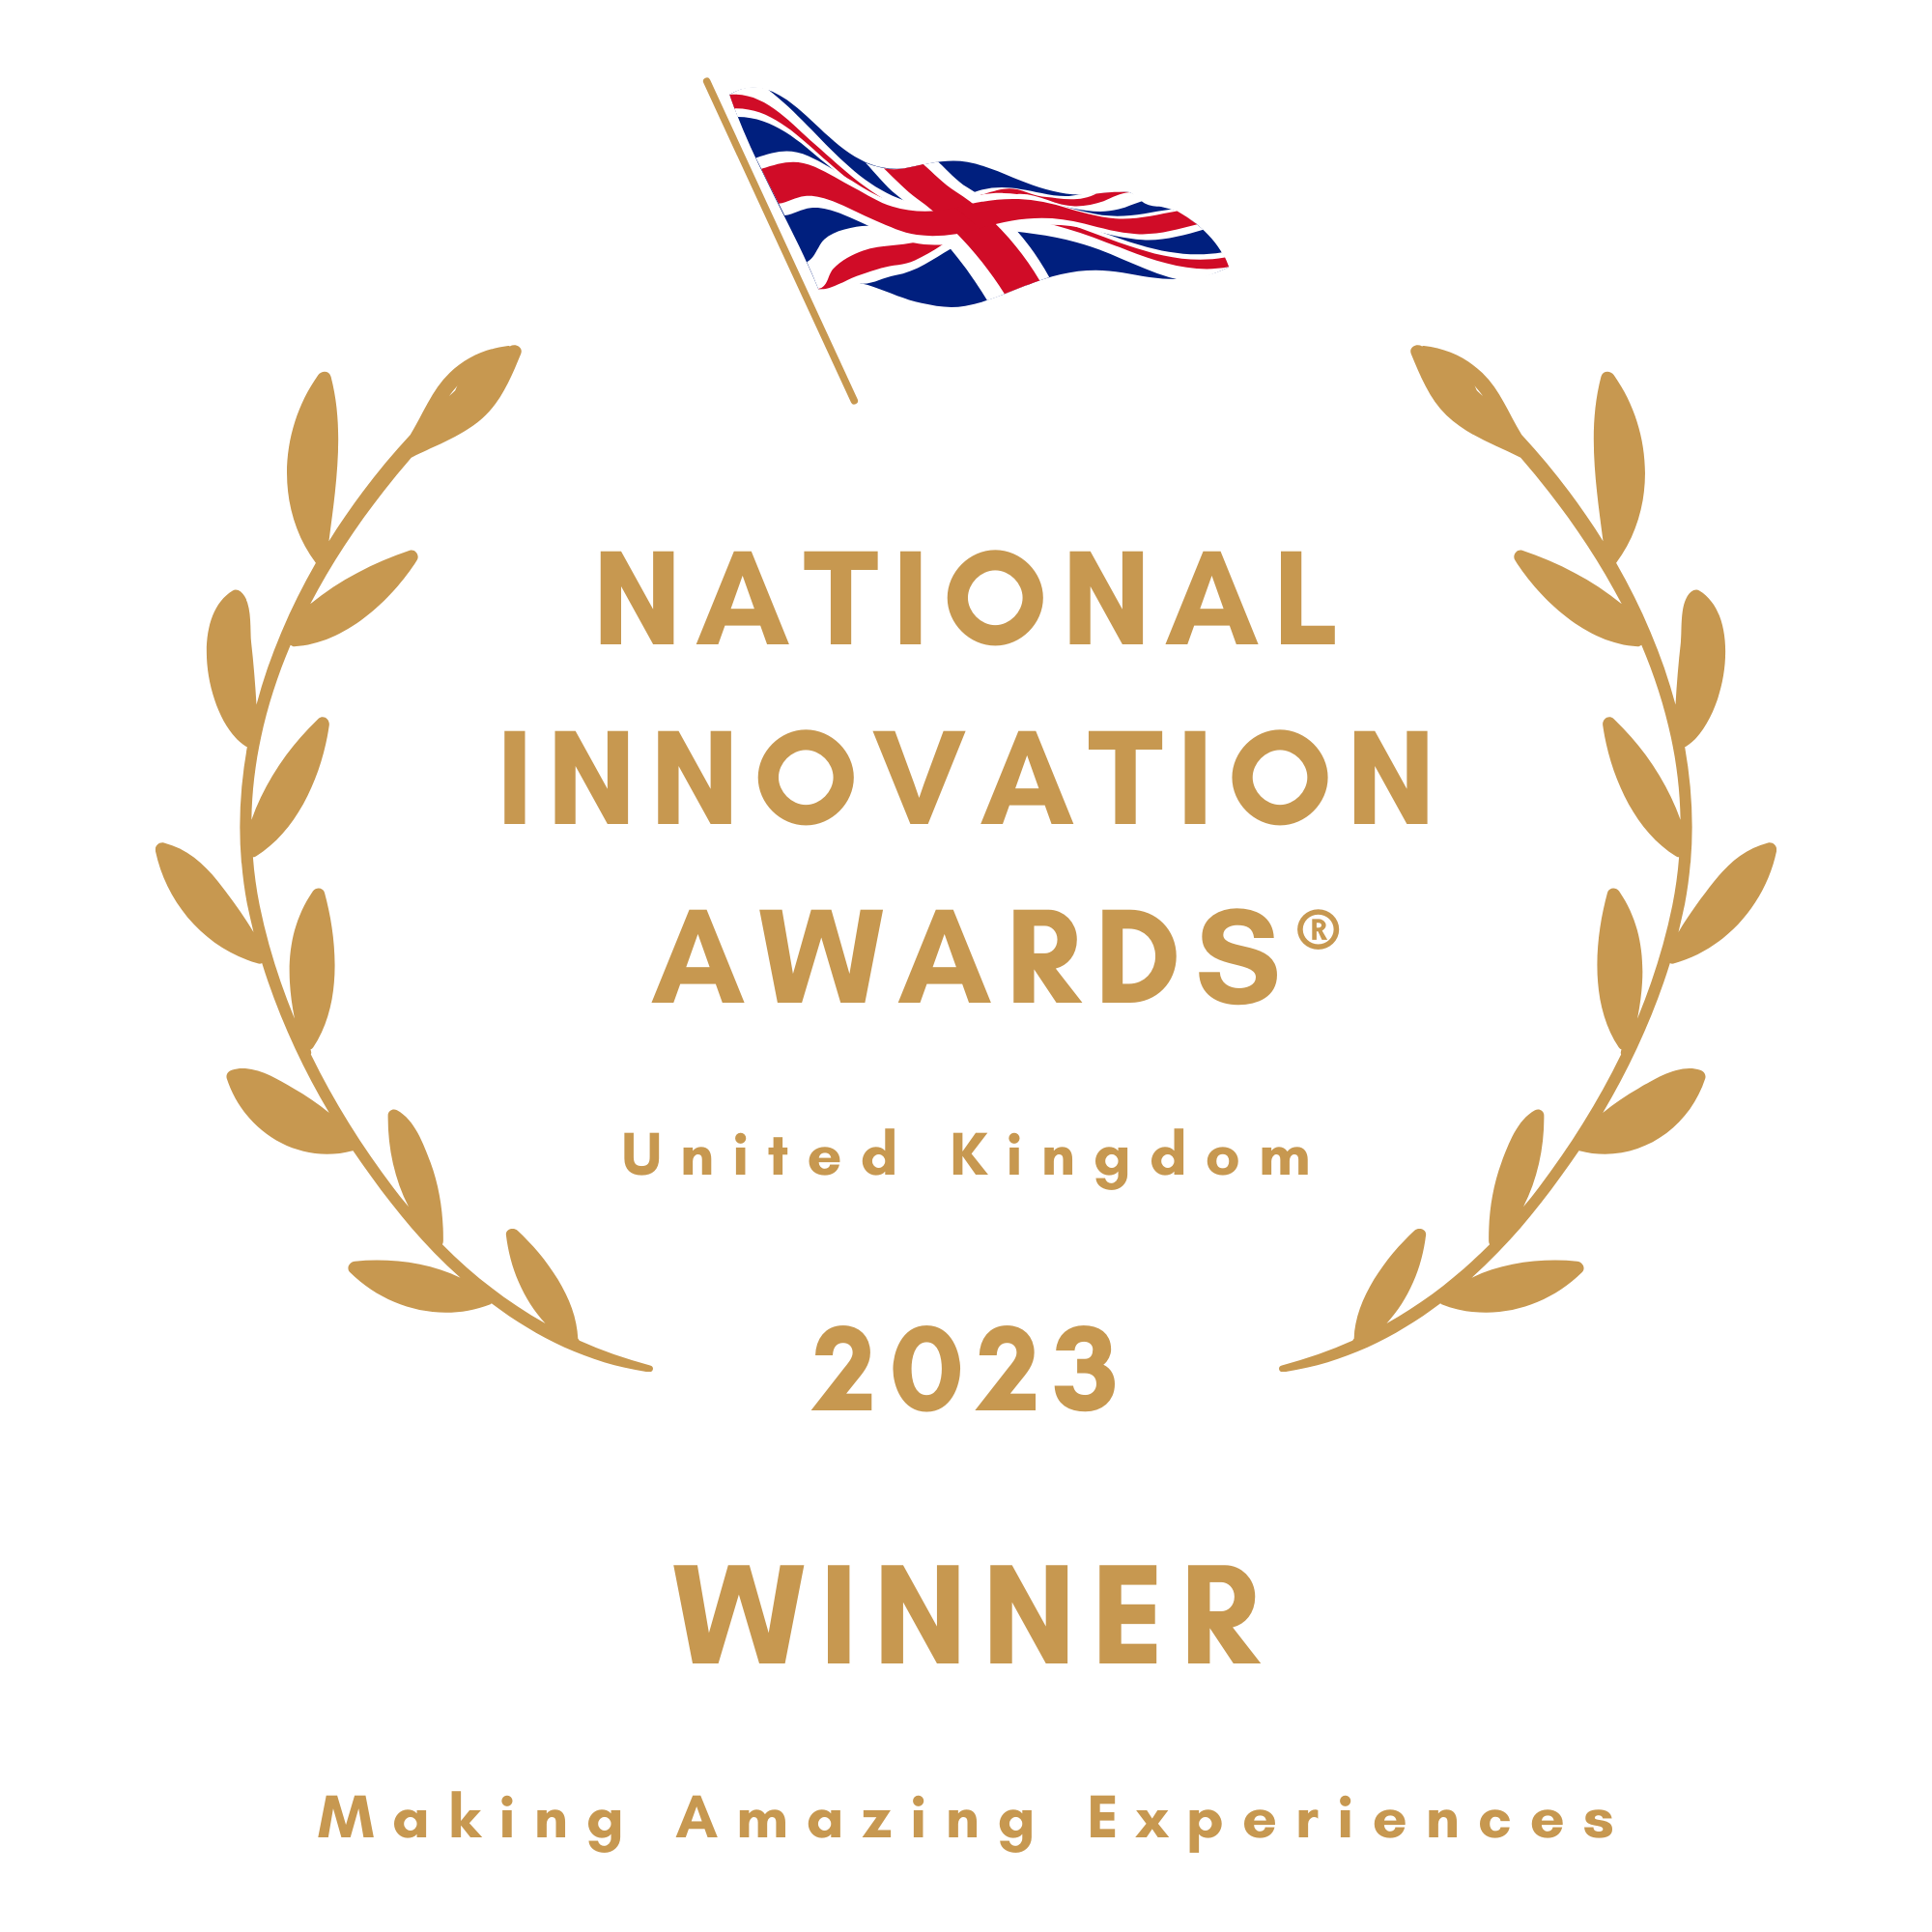 National Innovation Awards winner 2023 - making amazing experiences